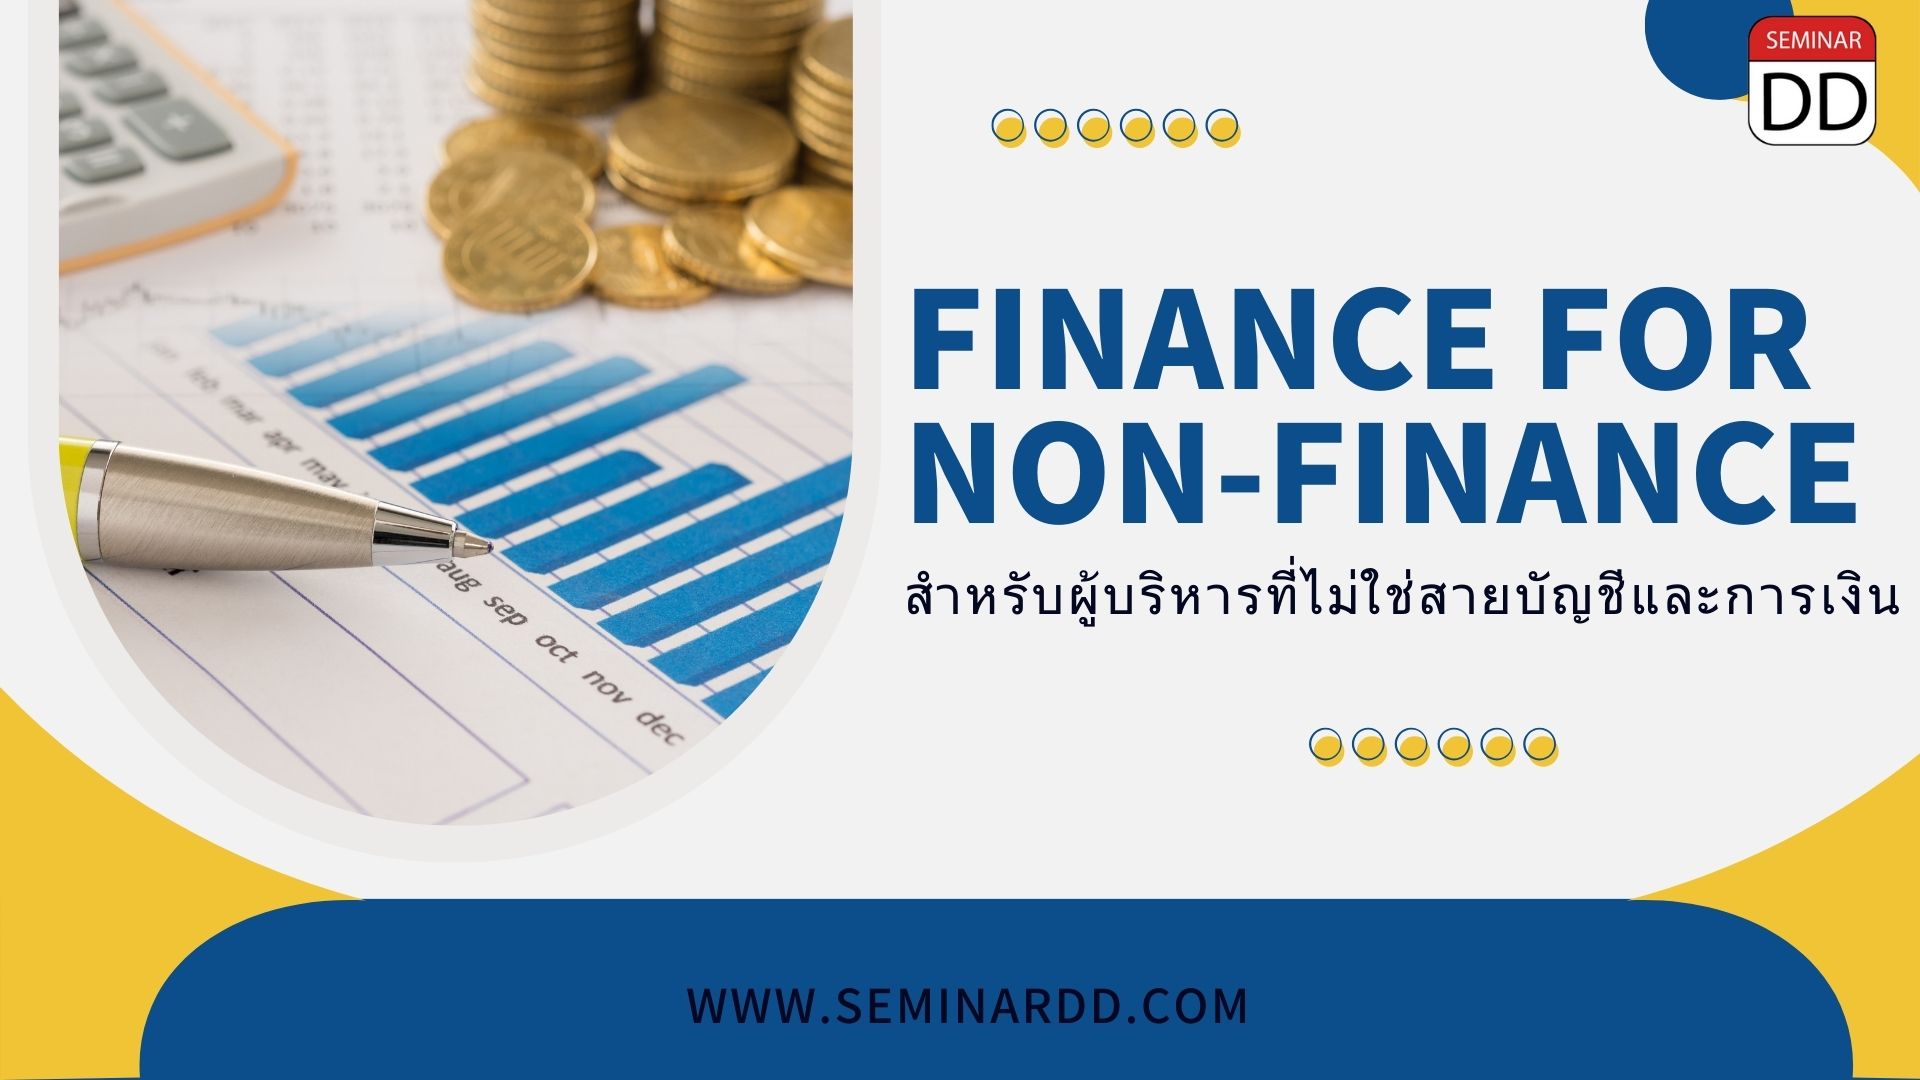 Finance for Non-Finance  สำหรับผู้บริหารที่ไม่ใช่สายบัญชี และการเงิน